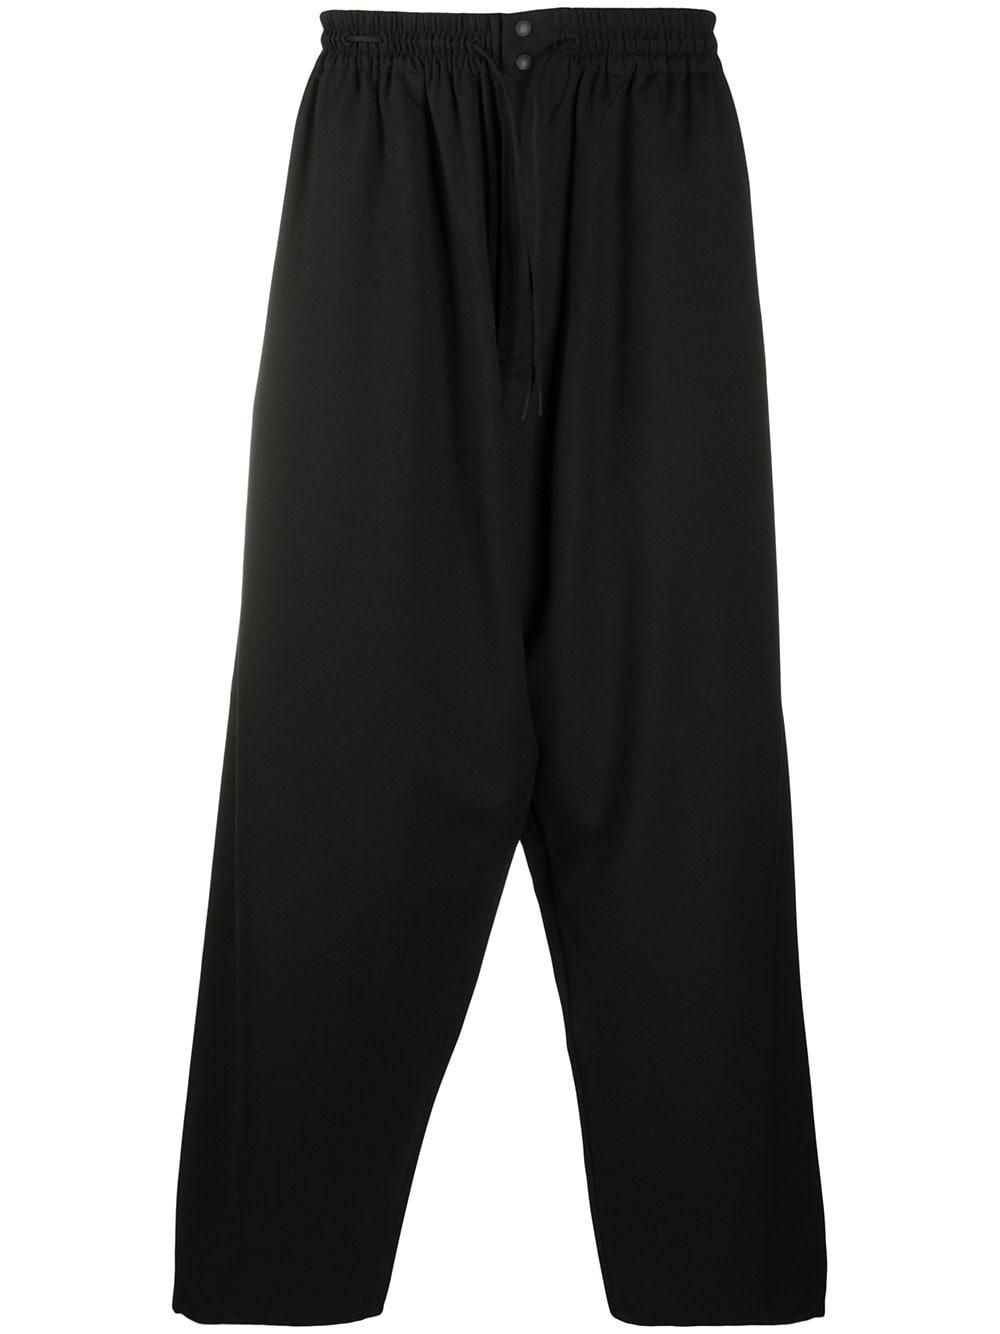 Y-3 Wool Drawstring Zoot Trousers in Black for Men - Lyst